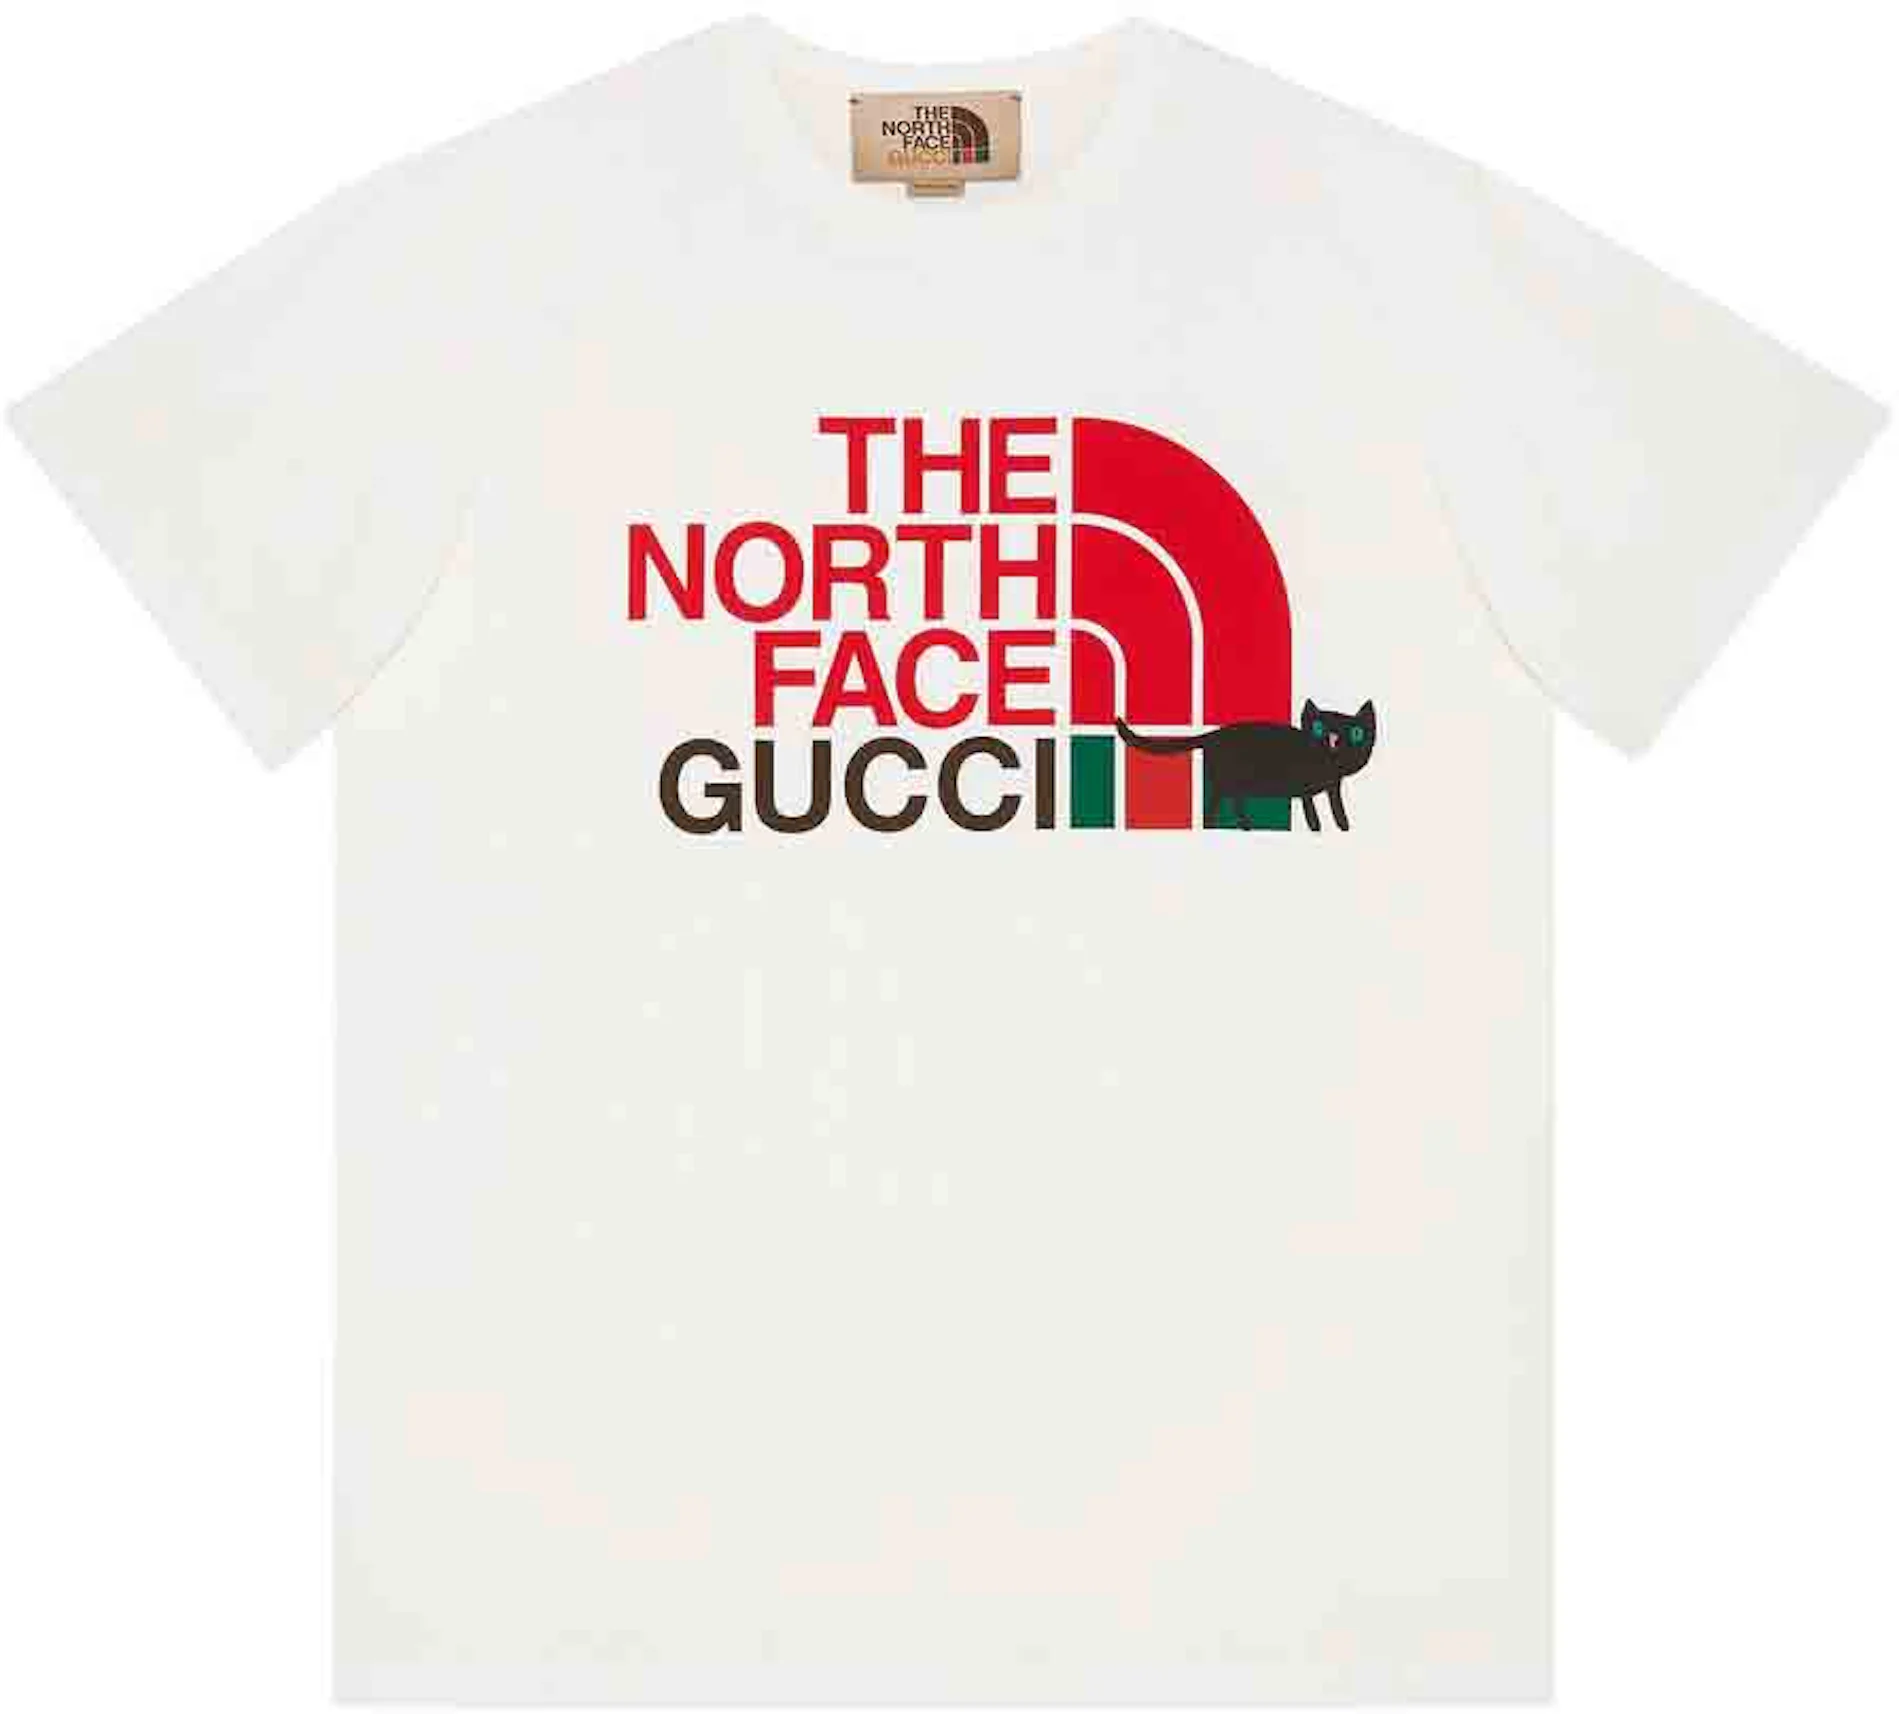 https://images.stockx.com/images/Gucci-x-The-North-Face-T-shirt-Off-White.jpg?fit=fill&bg=FFFFFF&w=1200&h=857&fm=webp&auto=compress&dpr=2&trim=color&updated_at=1638835112&q=60